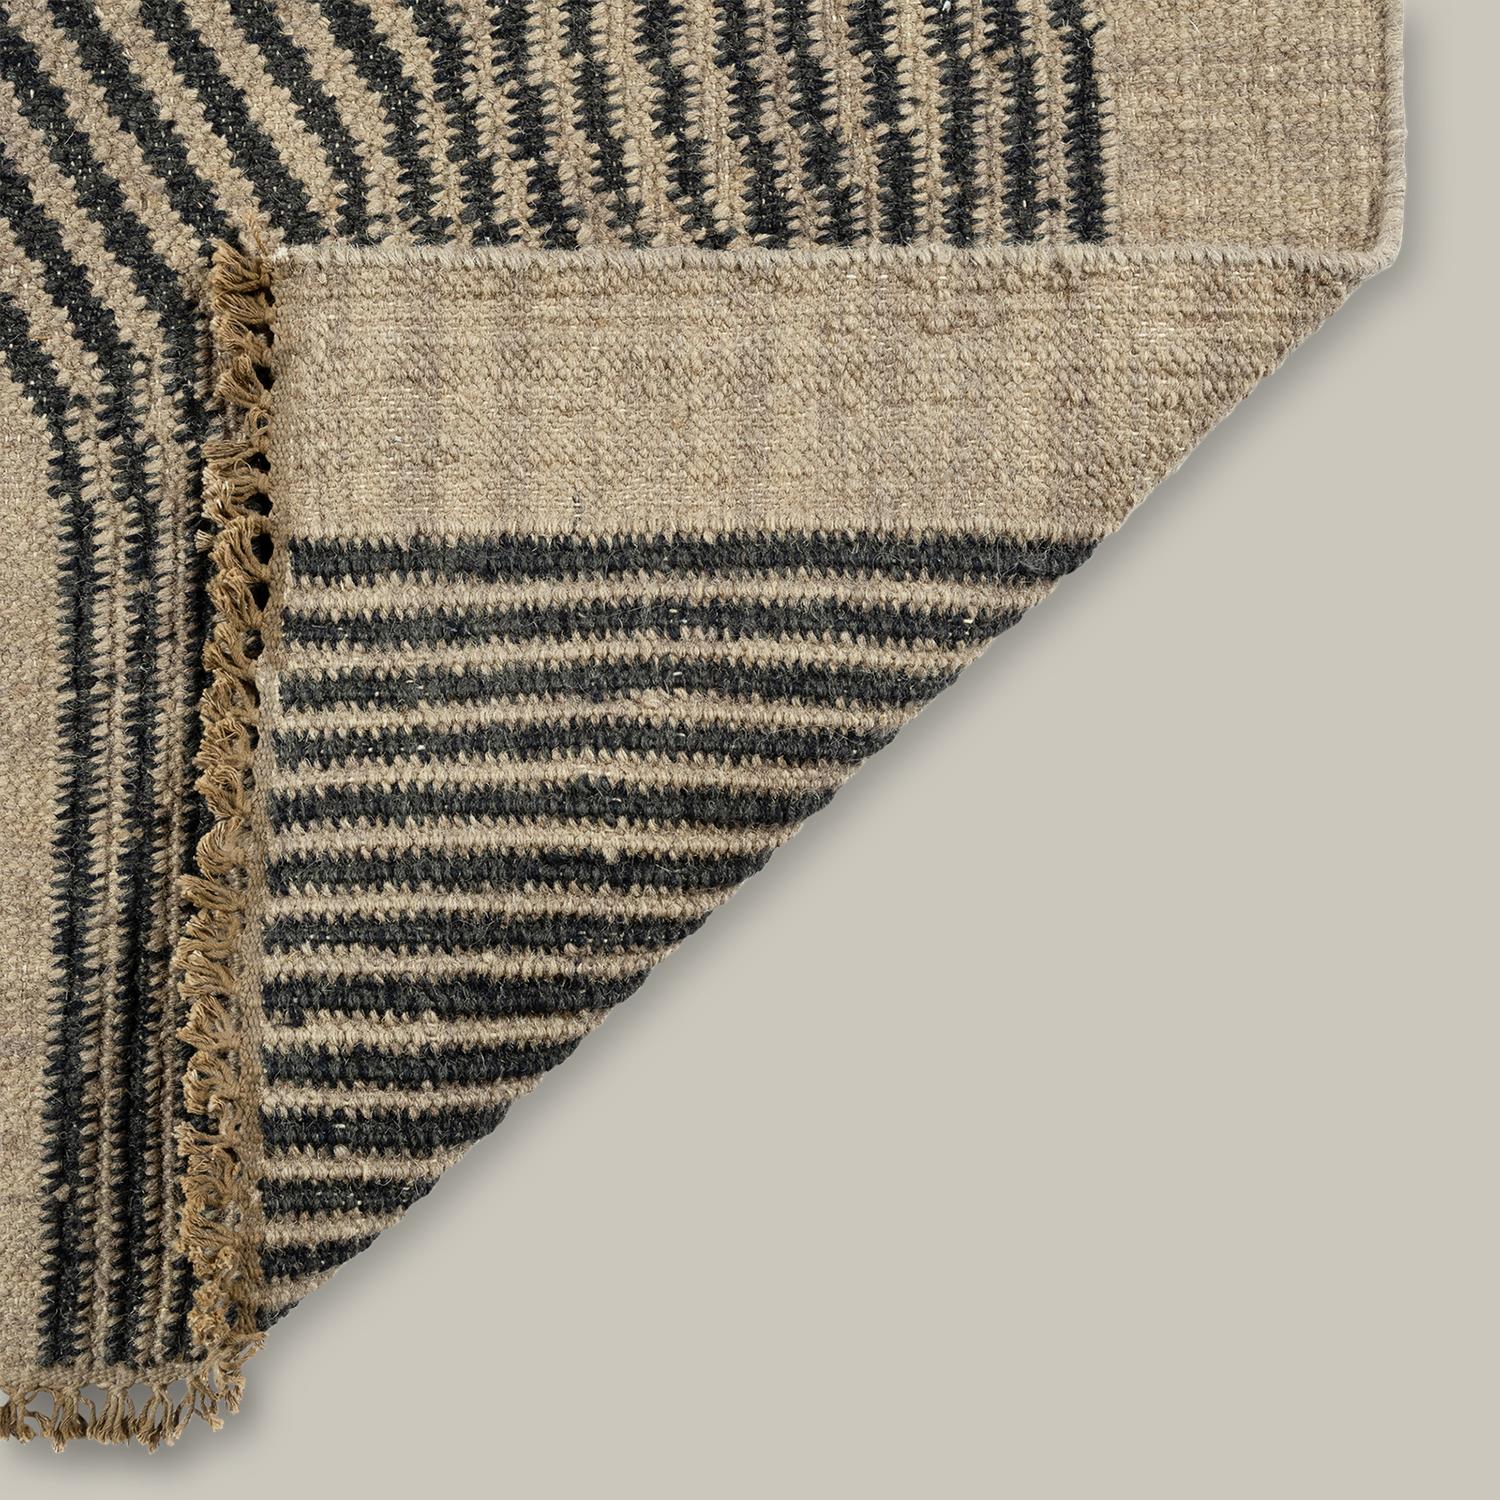 Leather “Metlili Tukar” Bespoke, Handwoven Wool Rug by Christiane Lemieux For Sale